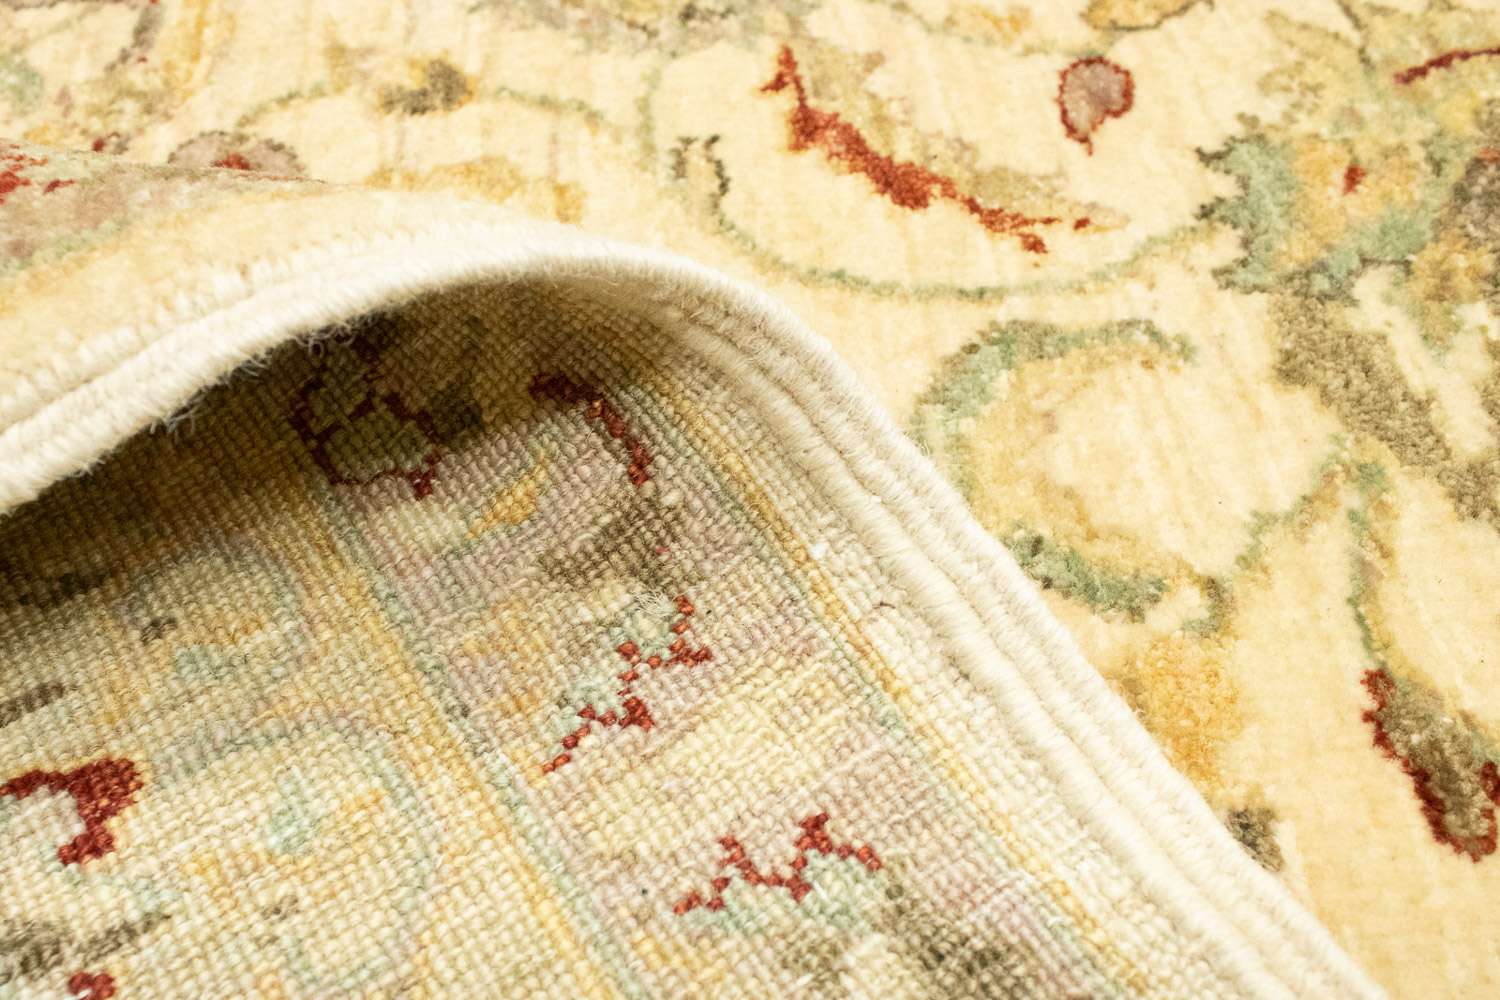 Ziegler Carpet - 262 x 184 cm - beige